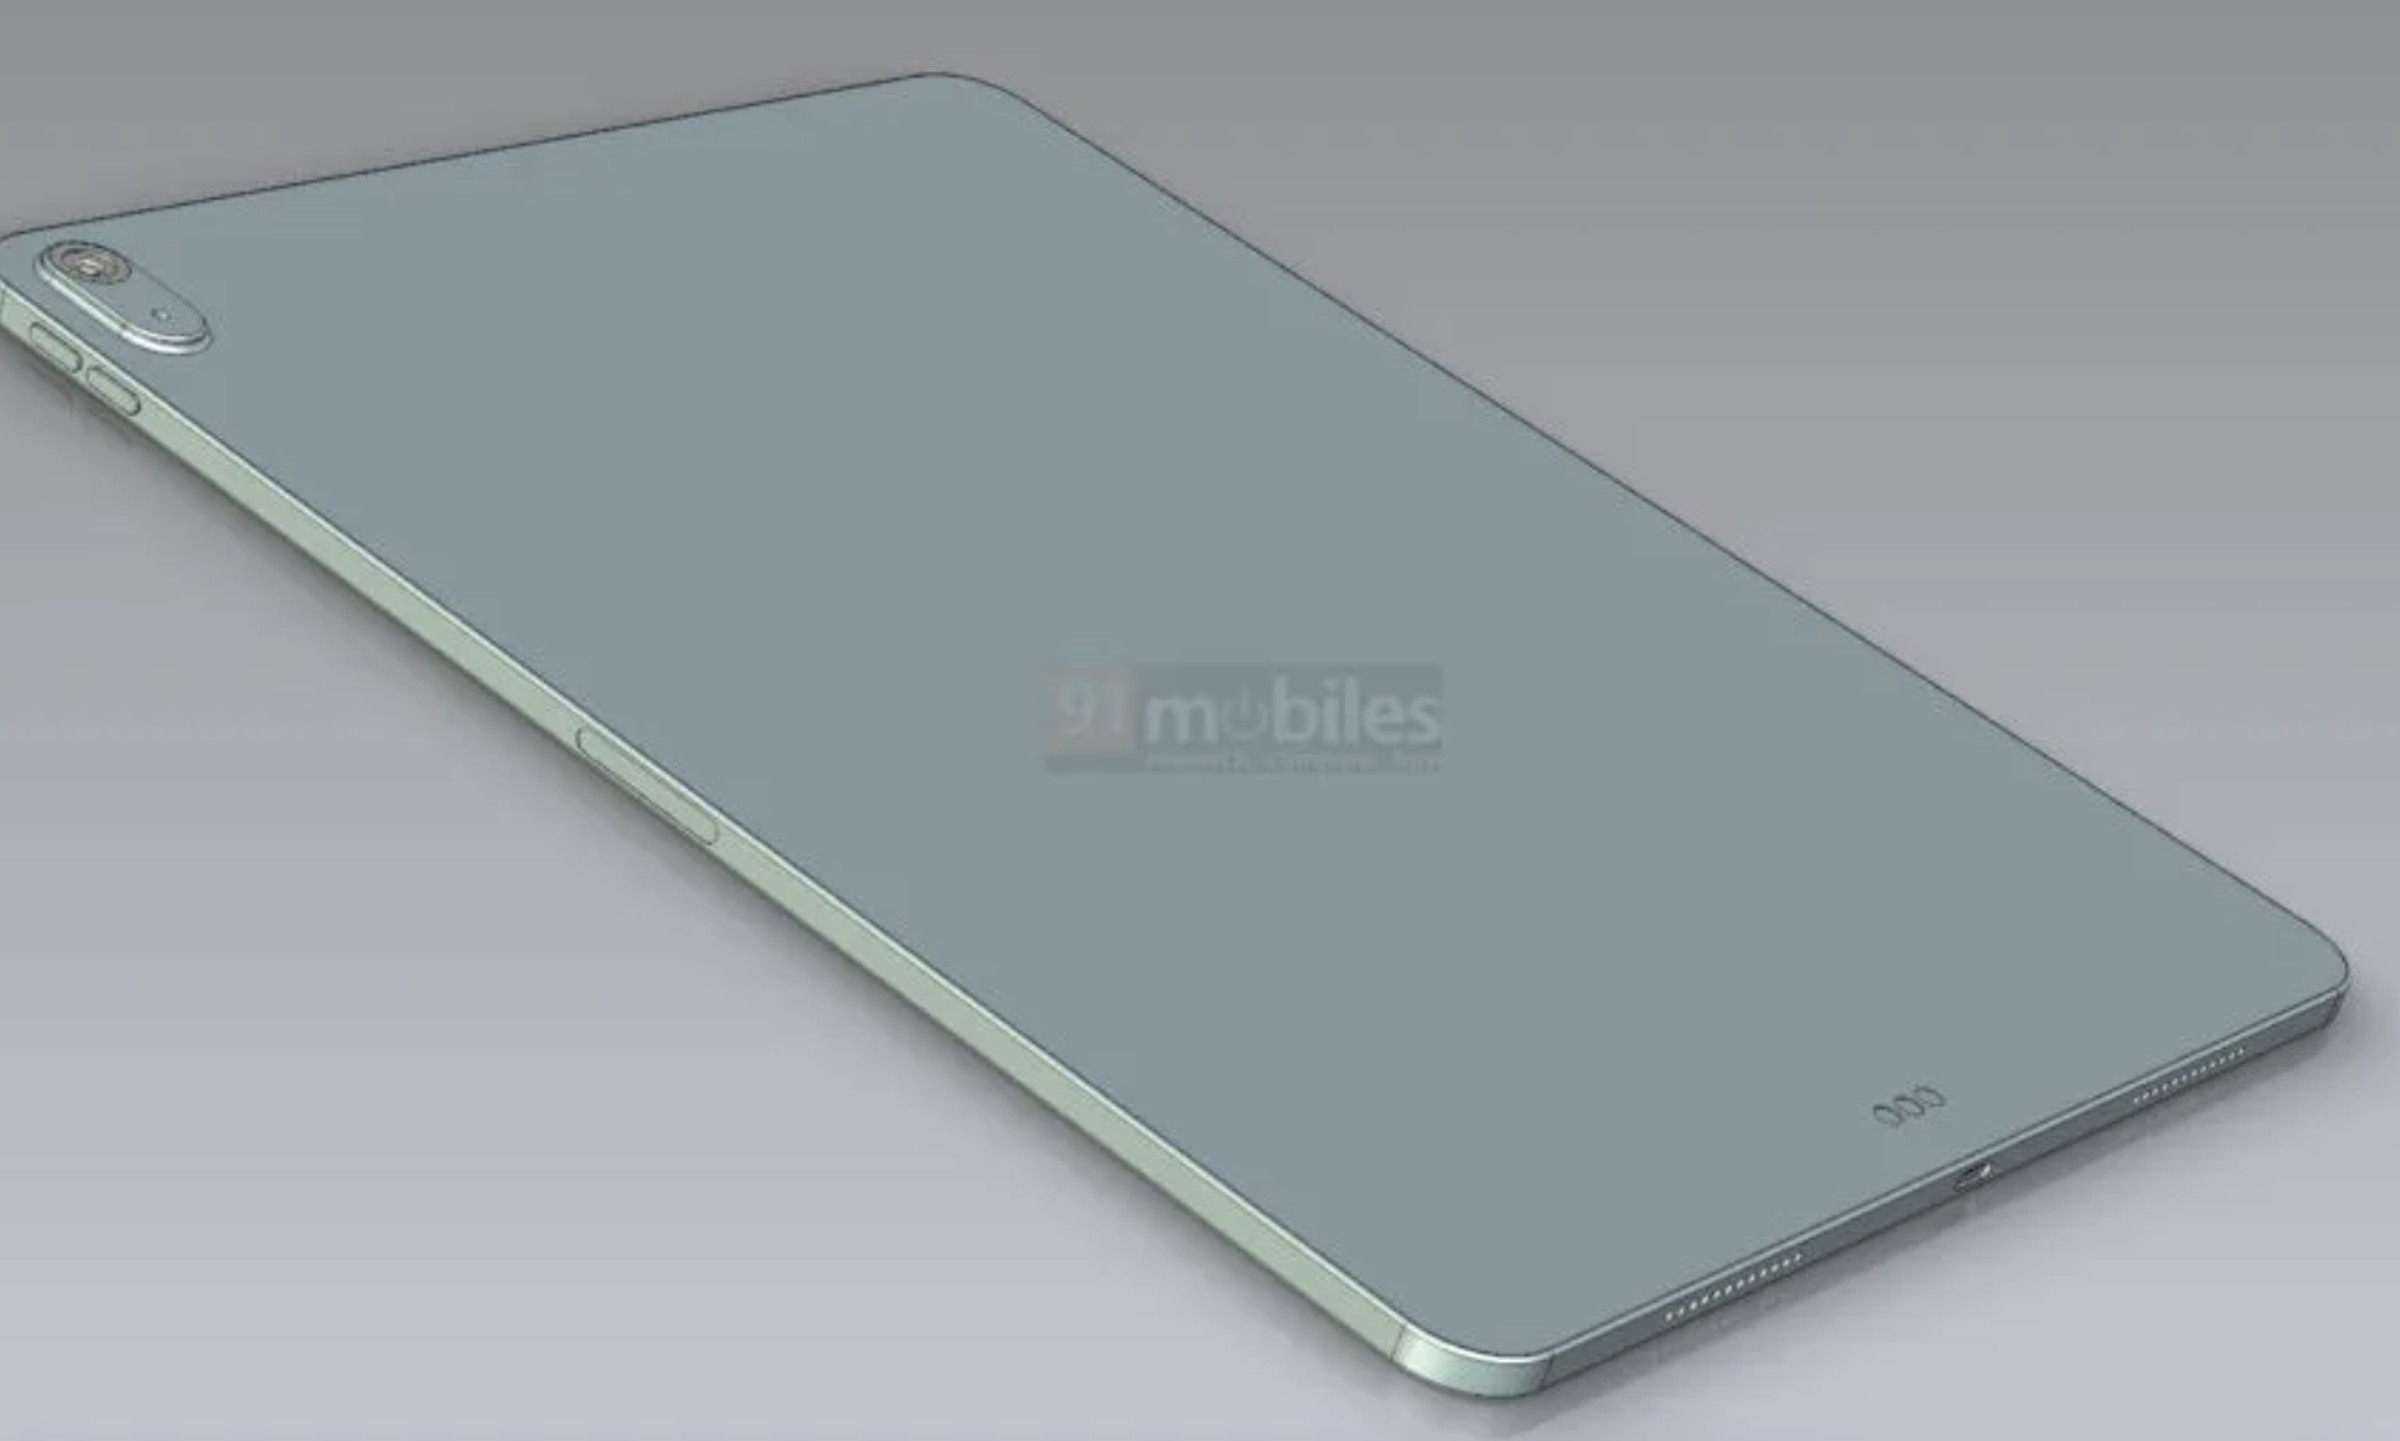 A CAD render of a 12.9-inch iPad Air.